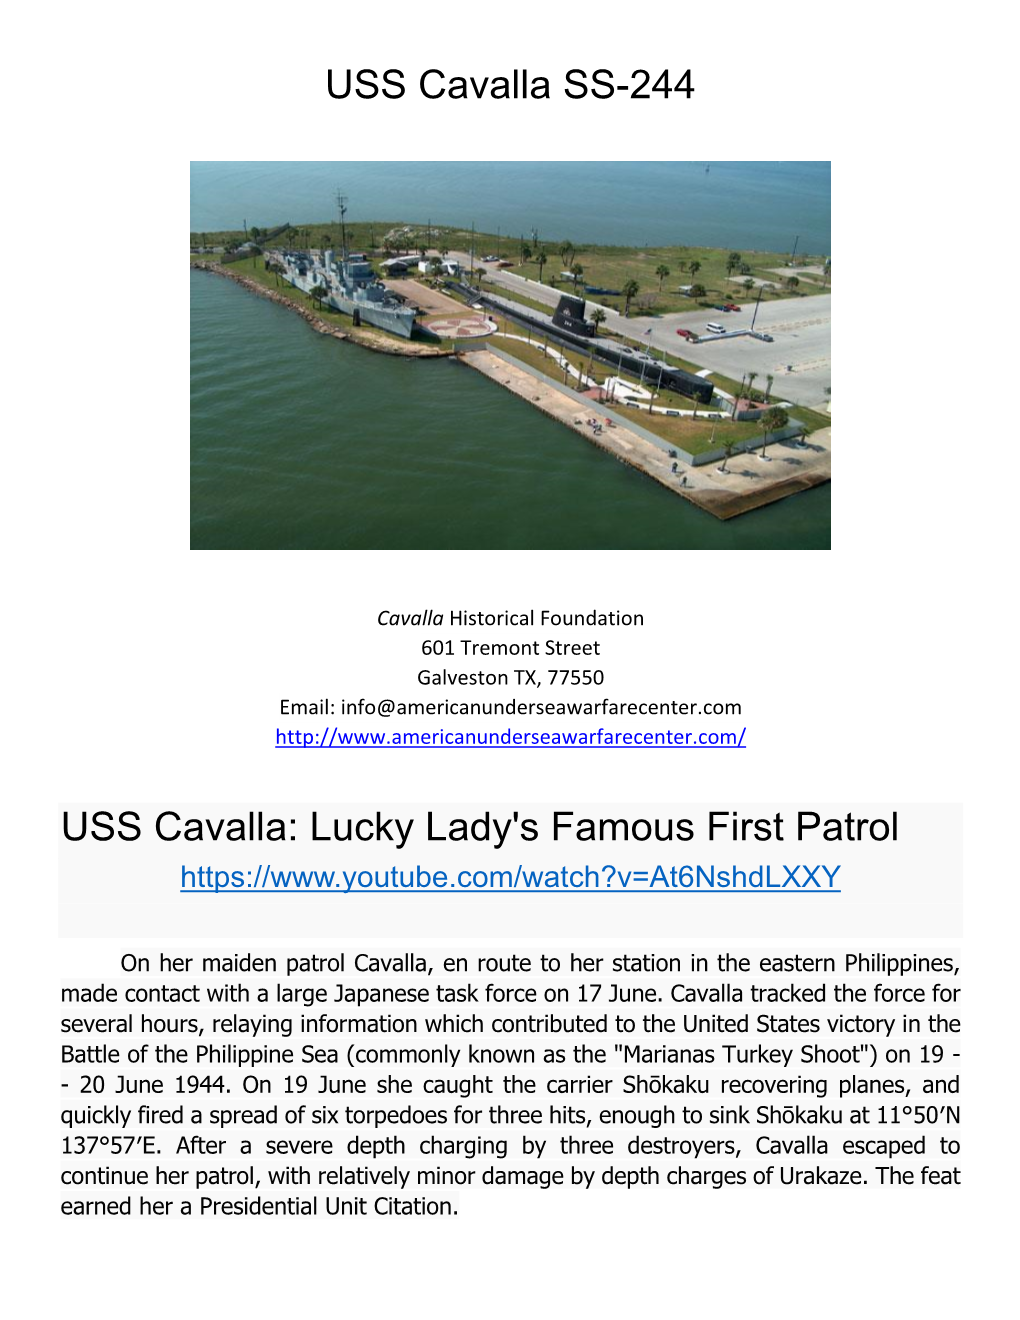 USS Cavalla SS-244 USS Cavalla: Lucky Lady's Famous First Patrol